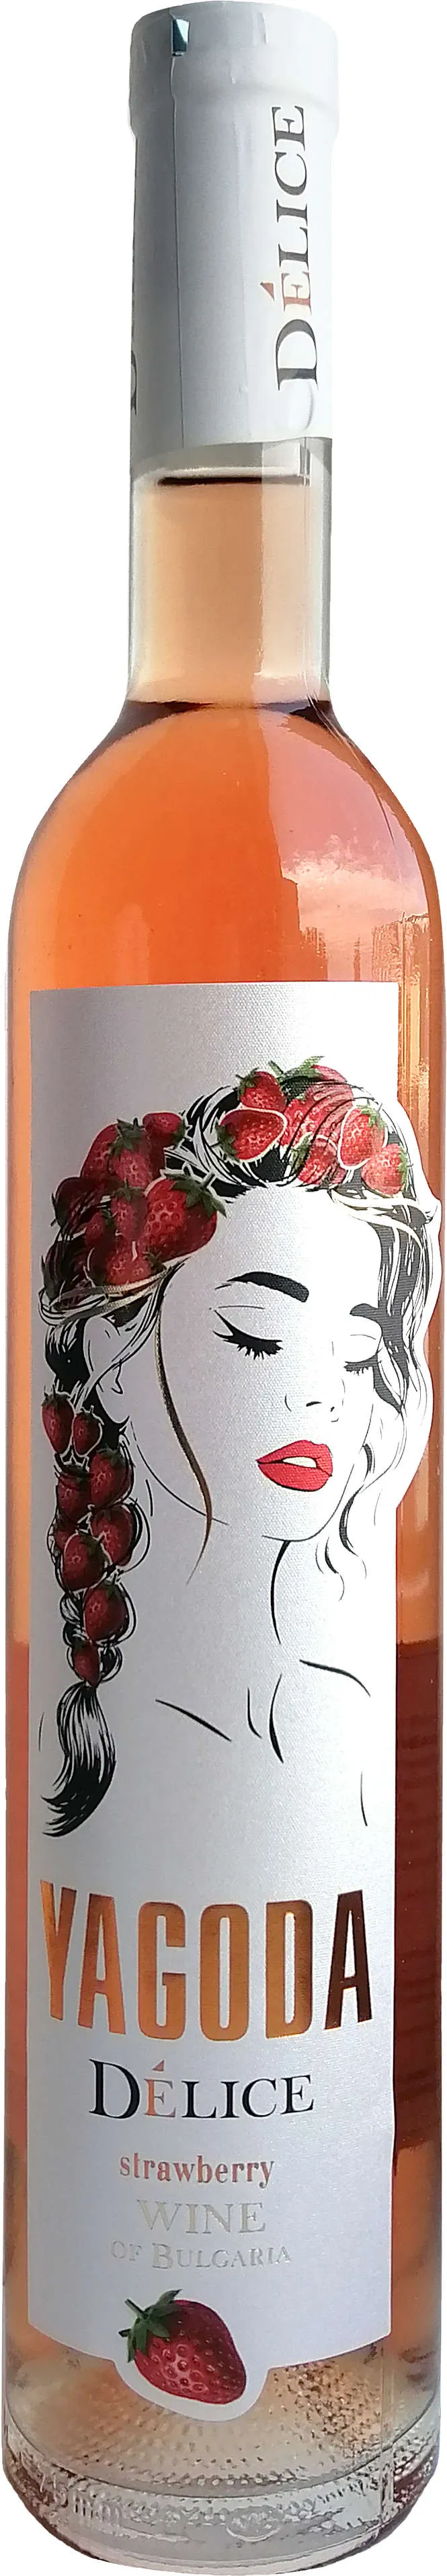 Плодово вино ягода